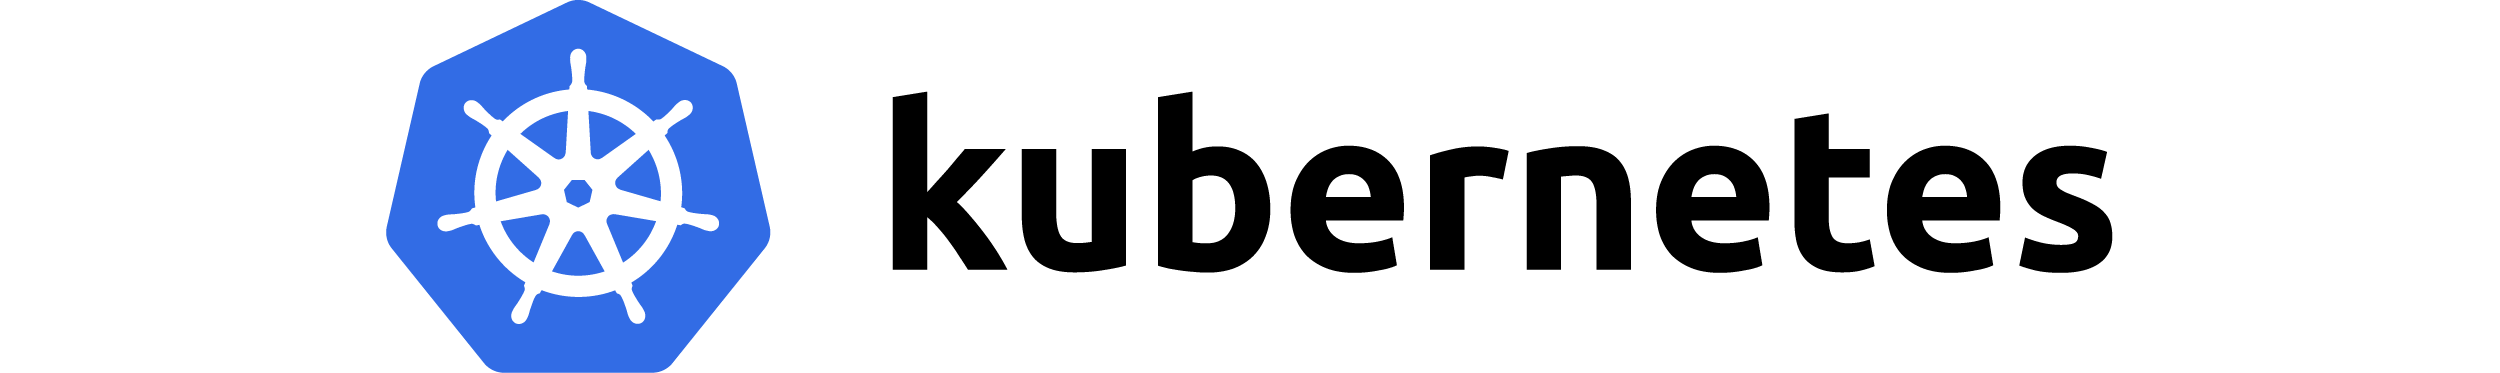 Kubernets Logo PNG - 178240